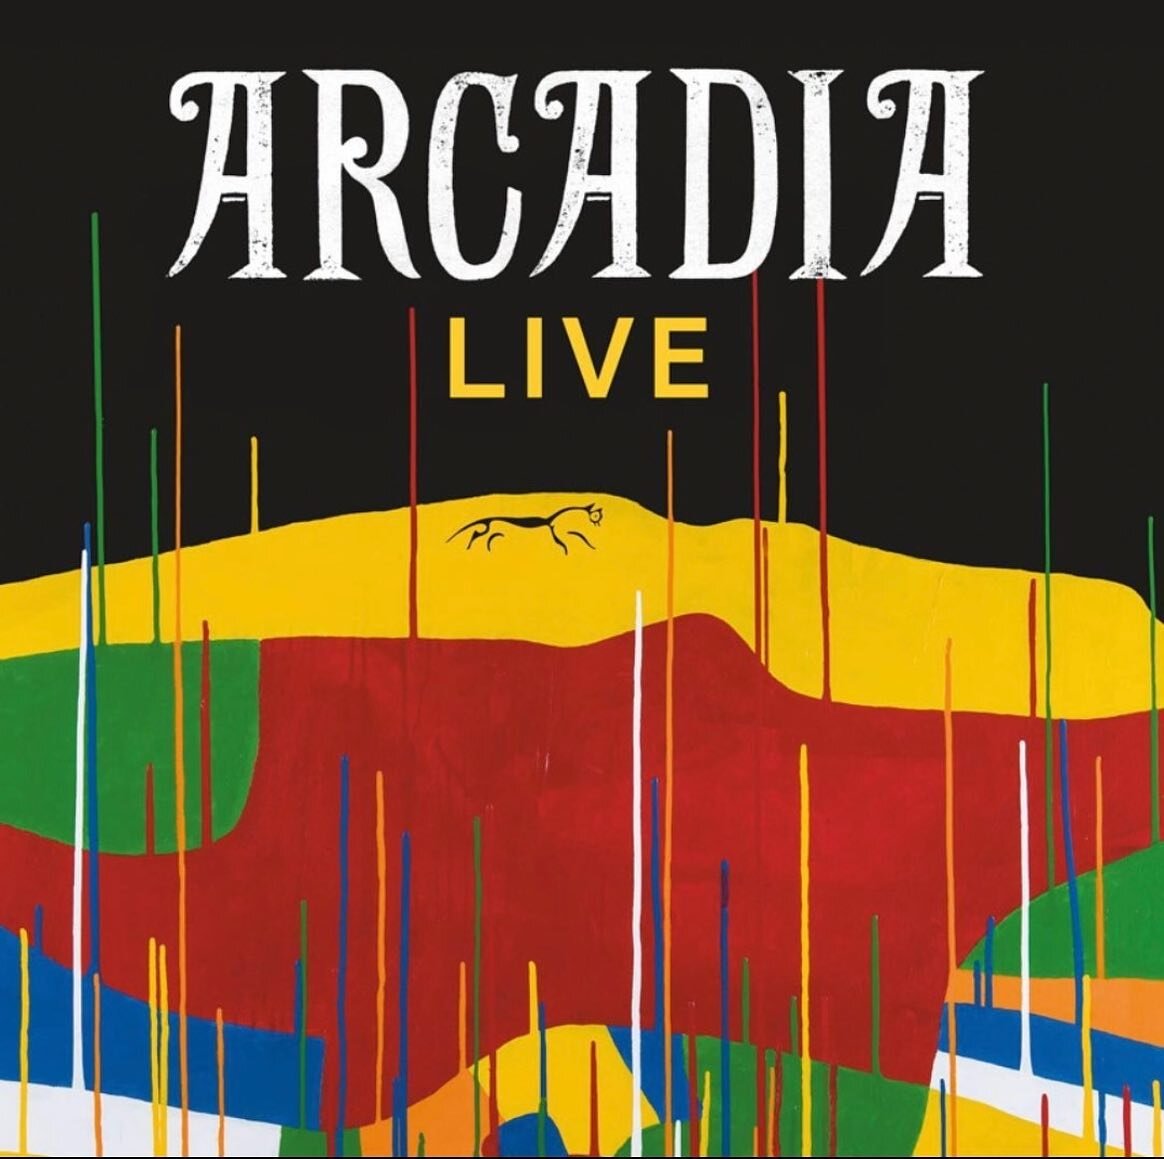 Great night last night watching Arcadia Live at @barbicancentre beautiful score, beautiful film 🖤
&bull;
&bull;
@rosshughesmusic @adrian.utley #willgregory @victoriaoruwarisoprano @lisavoice #paulwright #arcadialive #barbican